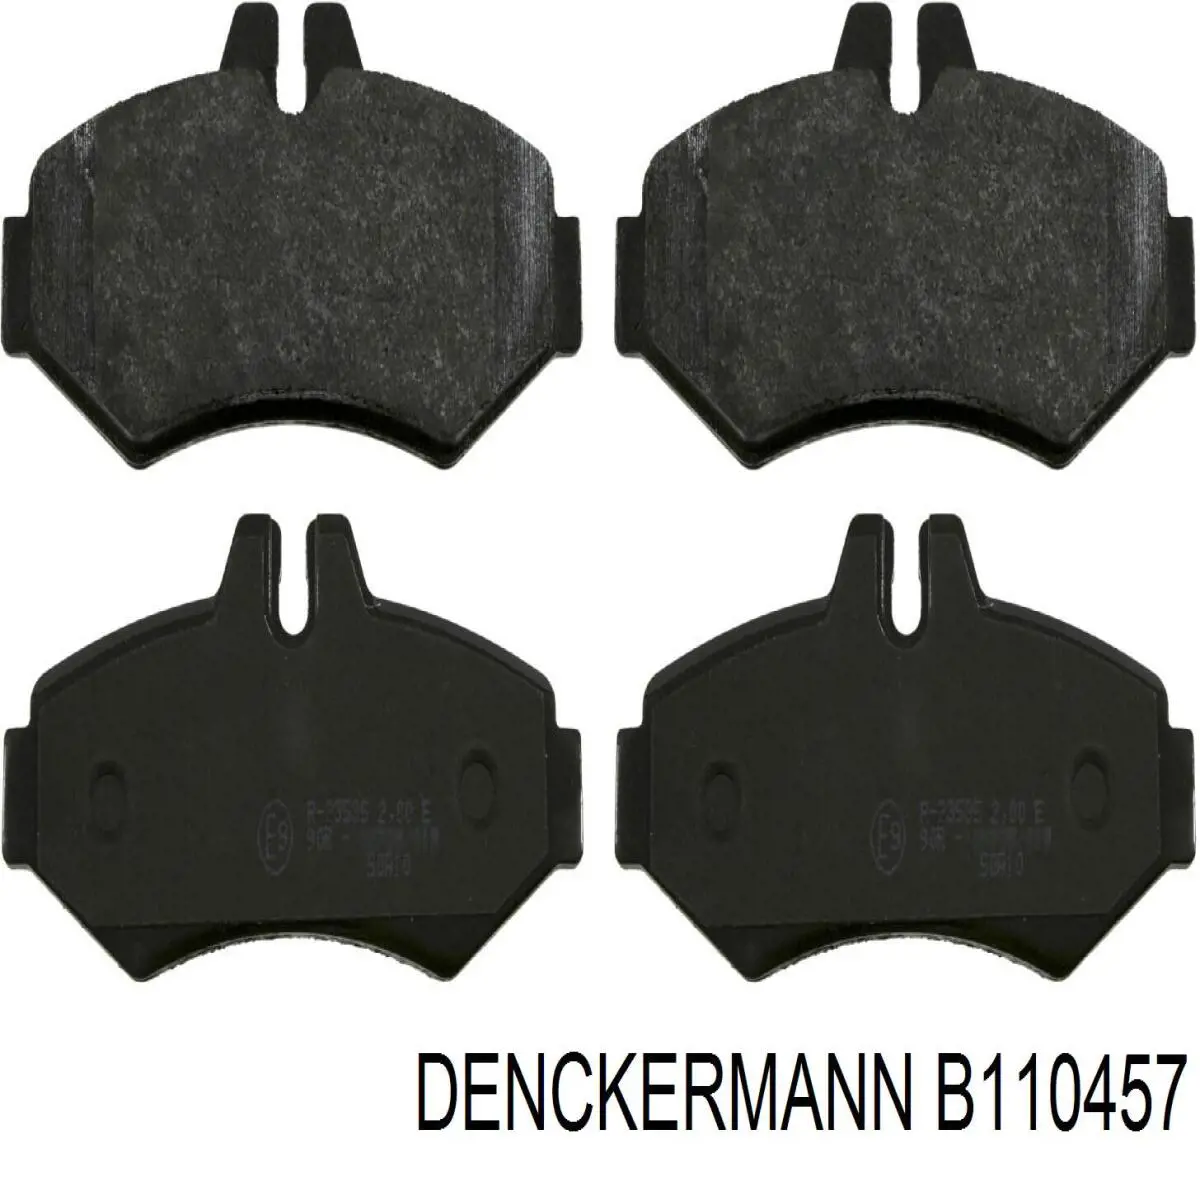 B110457 Denckermann задние тормозные колодки